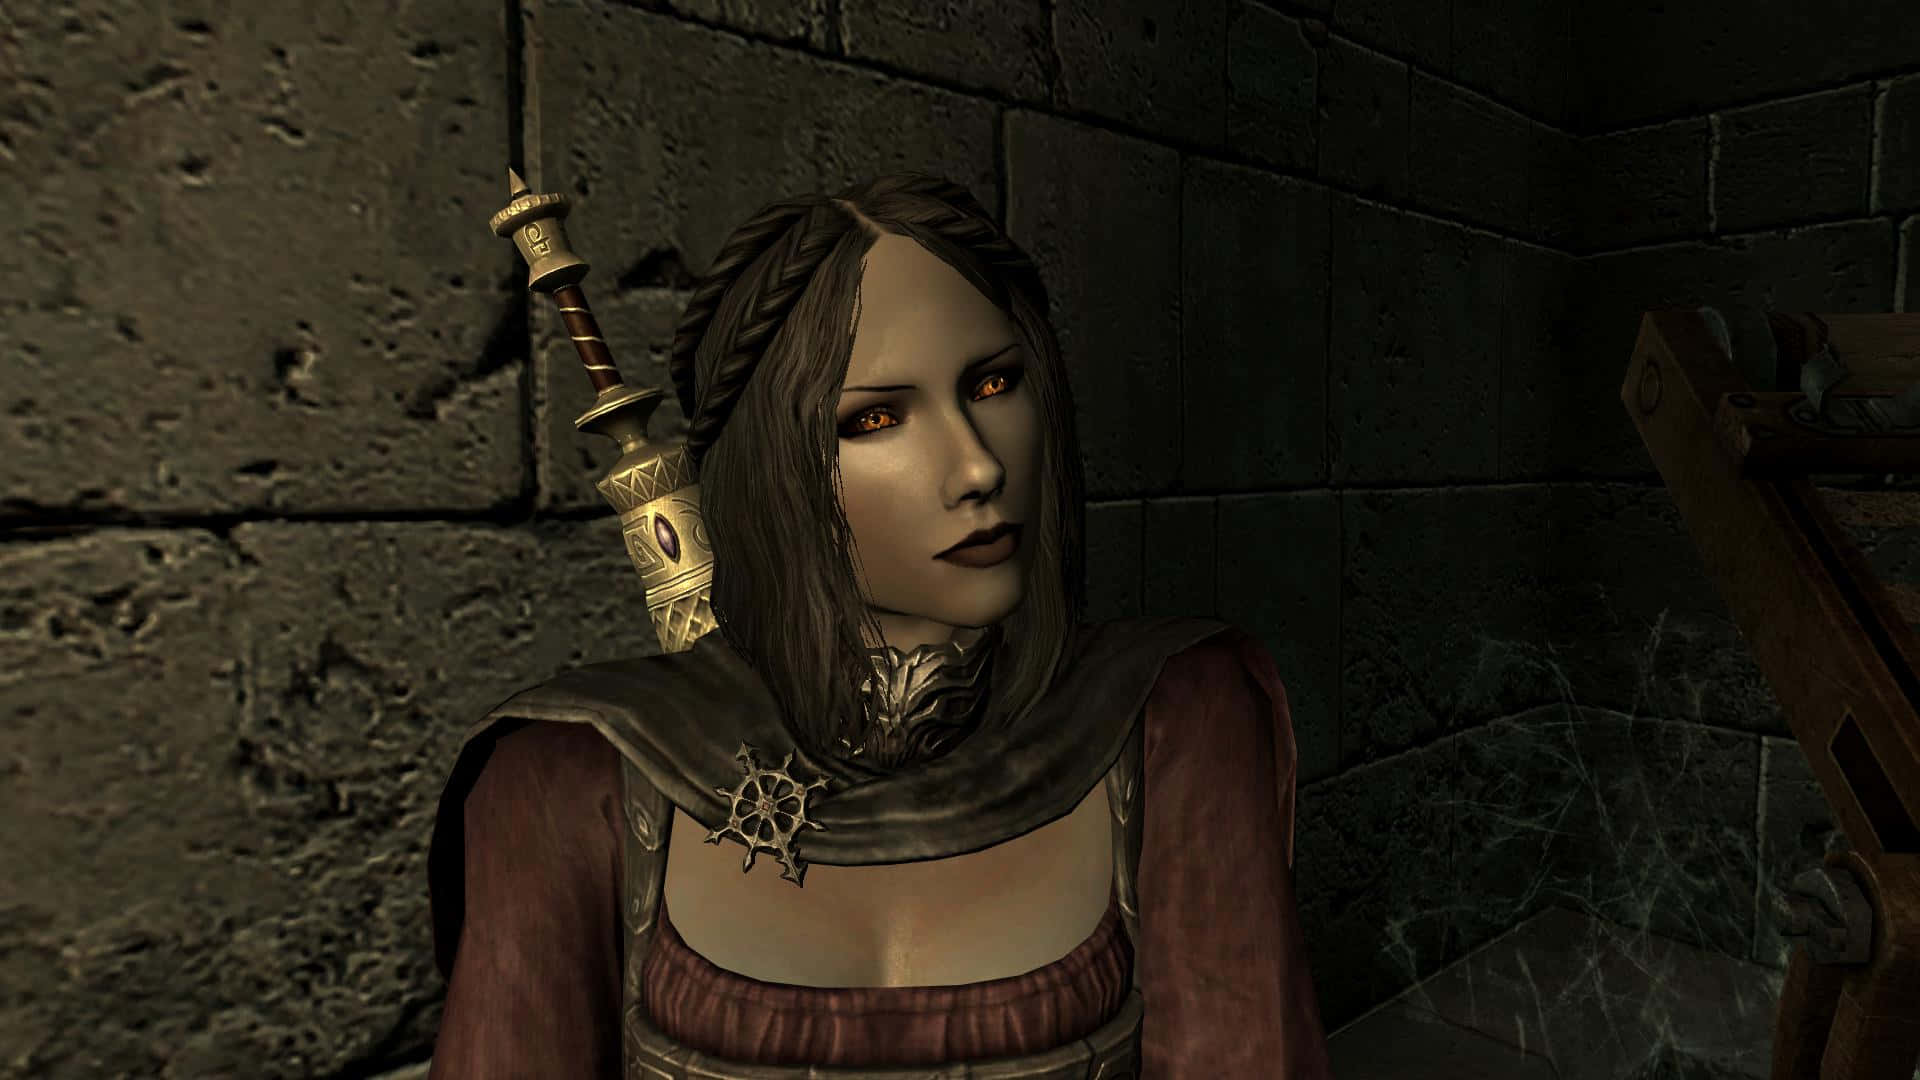 Serana, Skyrim's Vampire Queen, in a Mysterious Forest Wallpaper